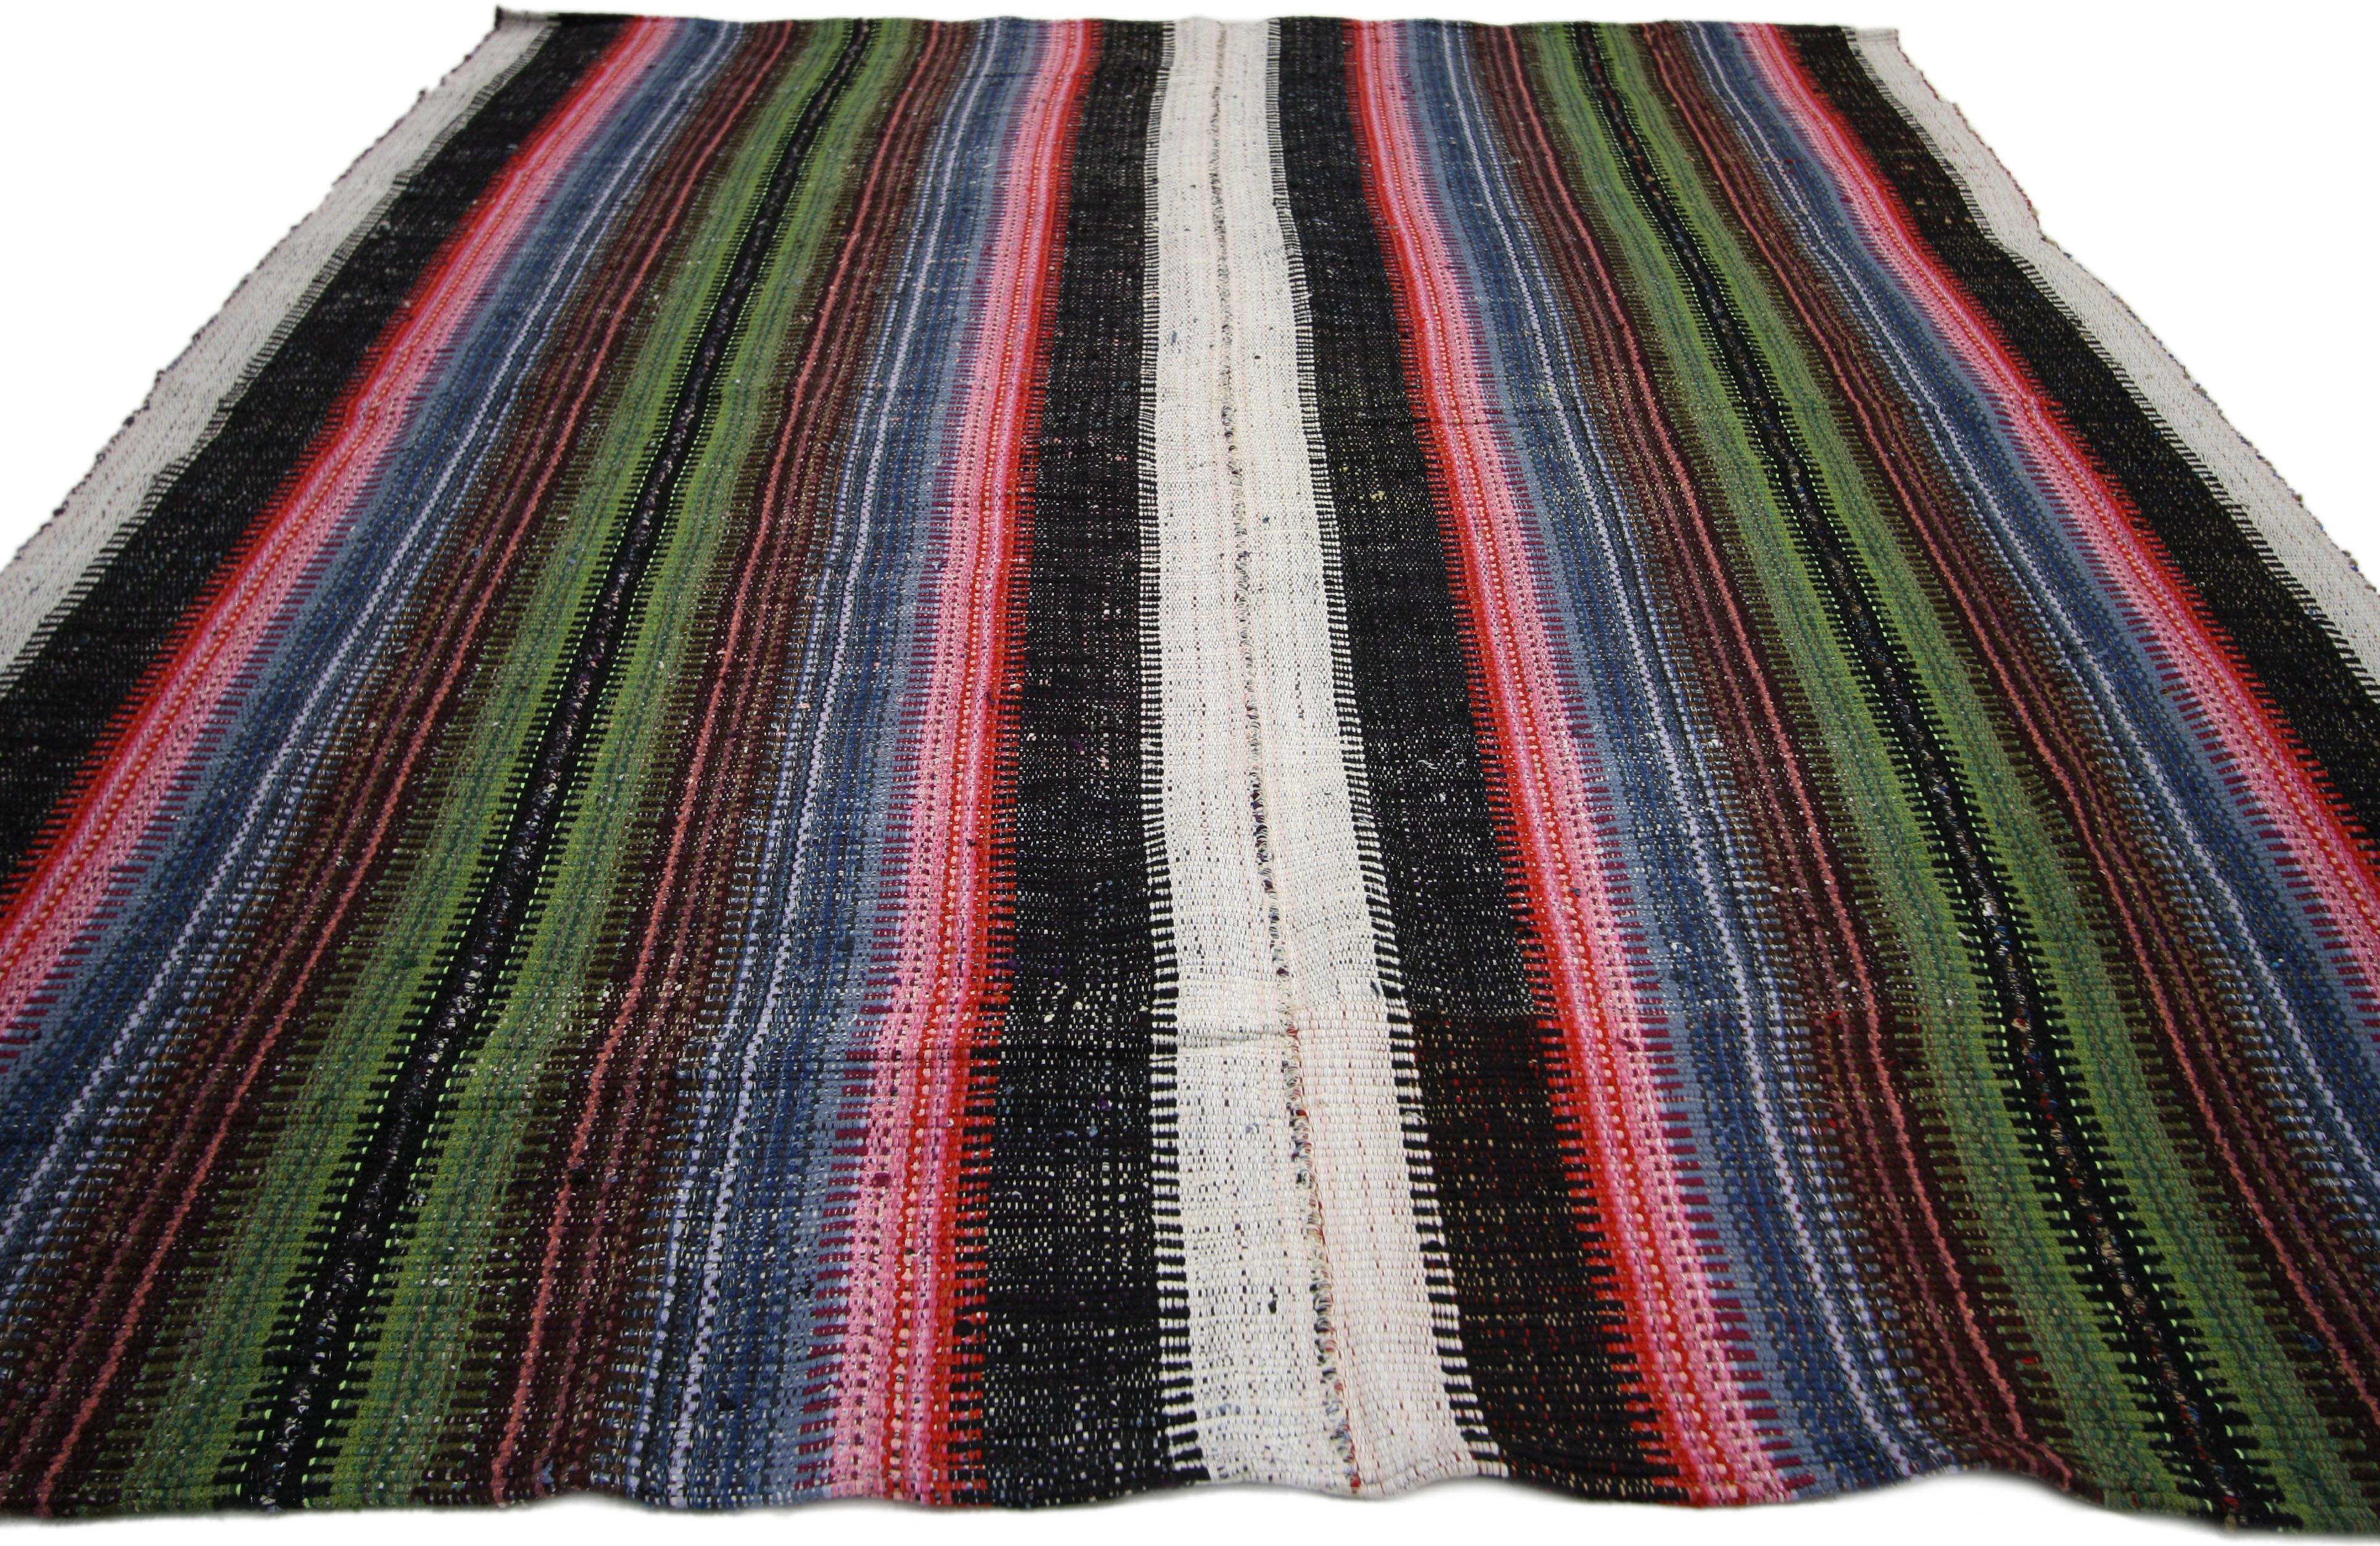 Hand-Woven Eclectic Modern Boho Vintage Turkish Jajim Colorful Kilim Rug with Stripes